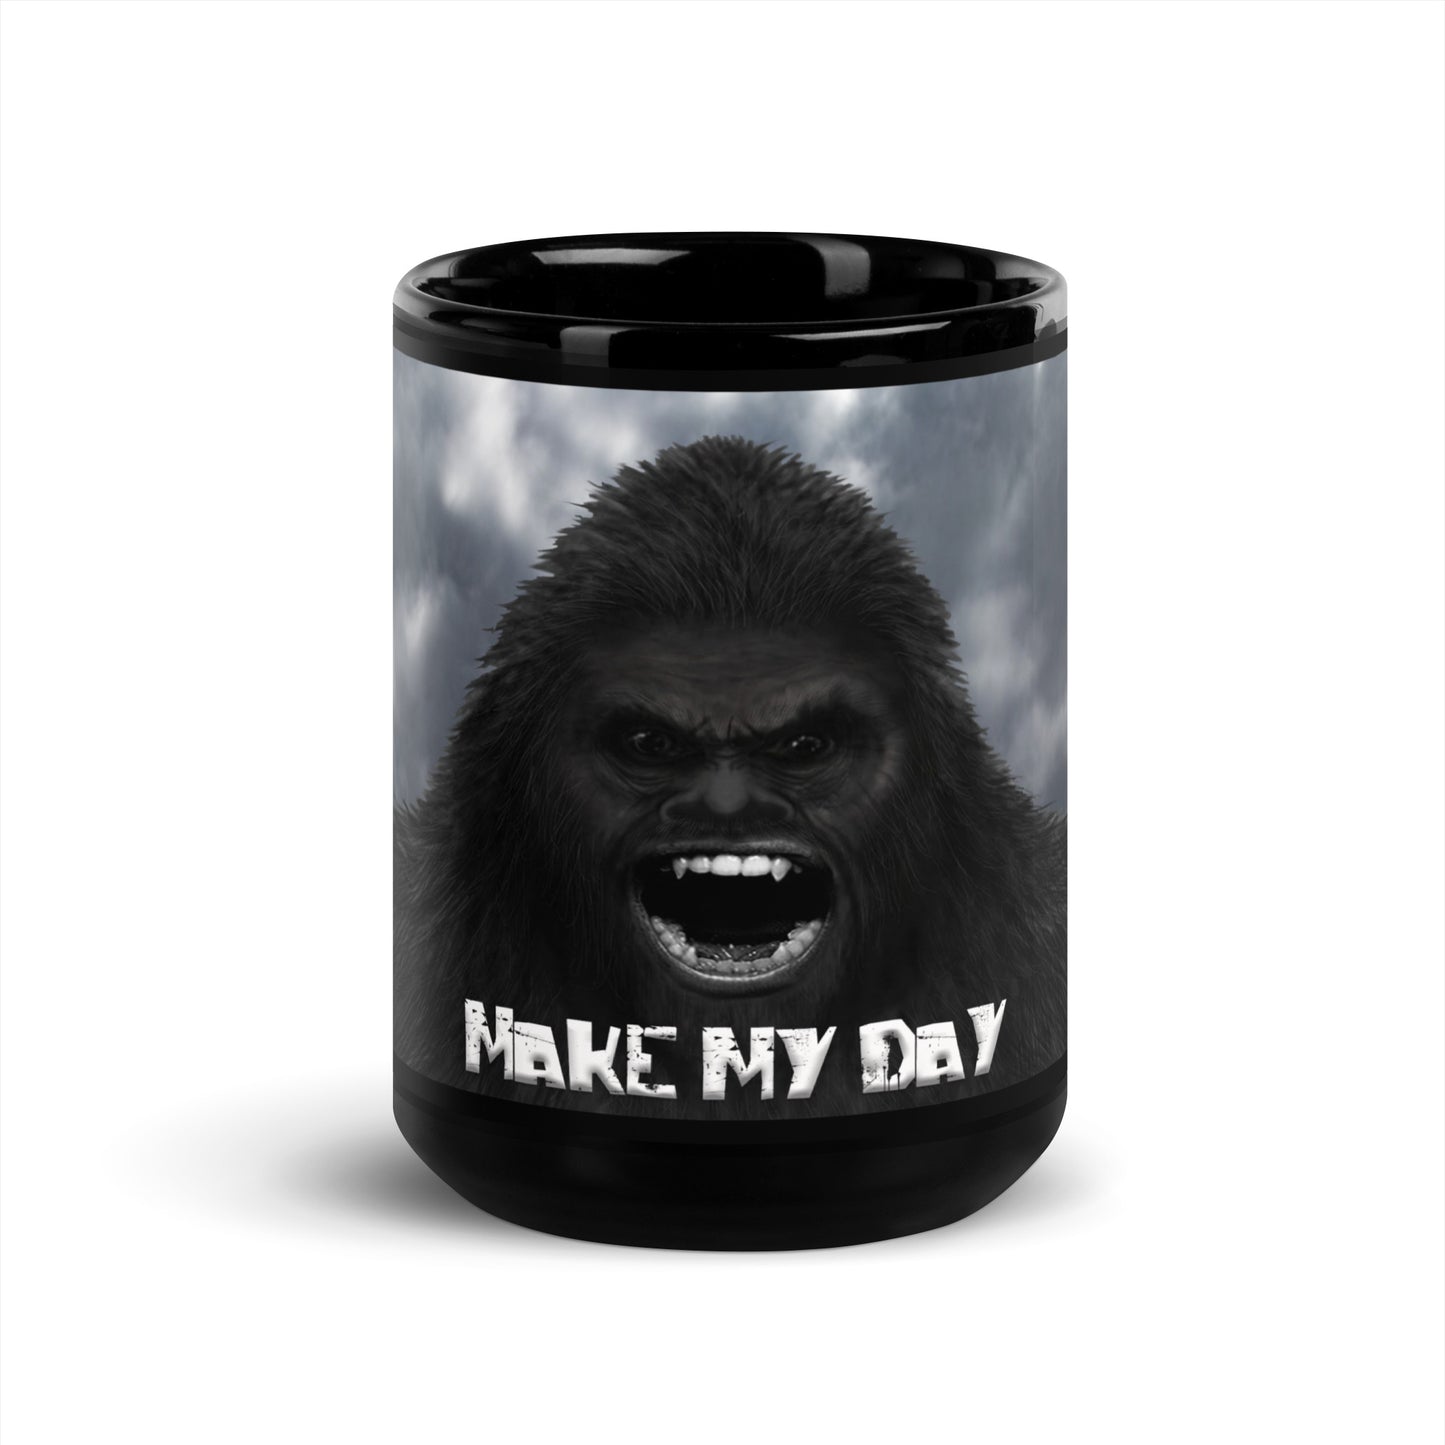 Sasquatch "Make My Day" Black Glossy Coffee Mug!